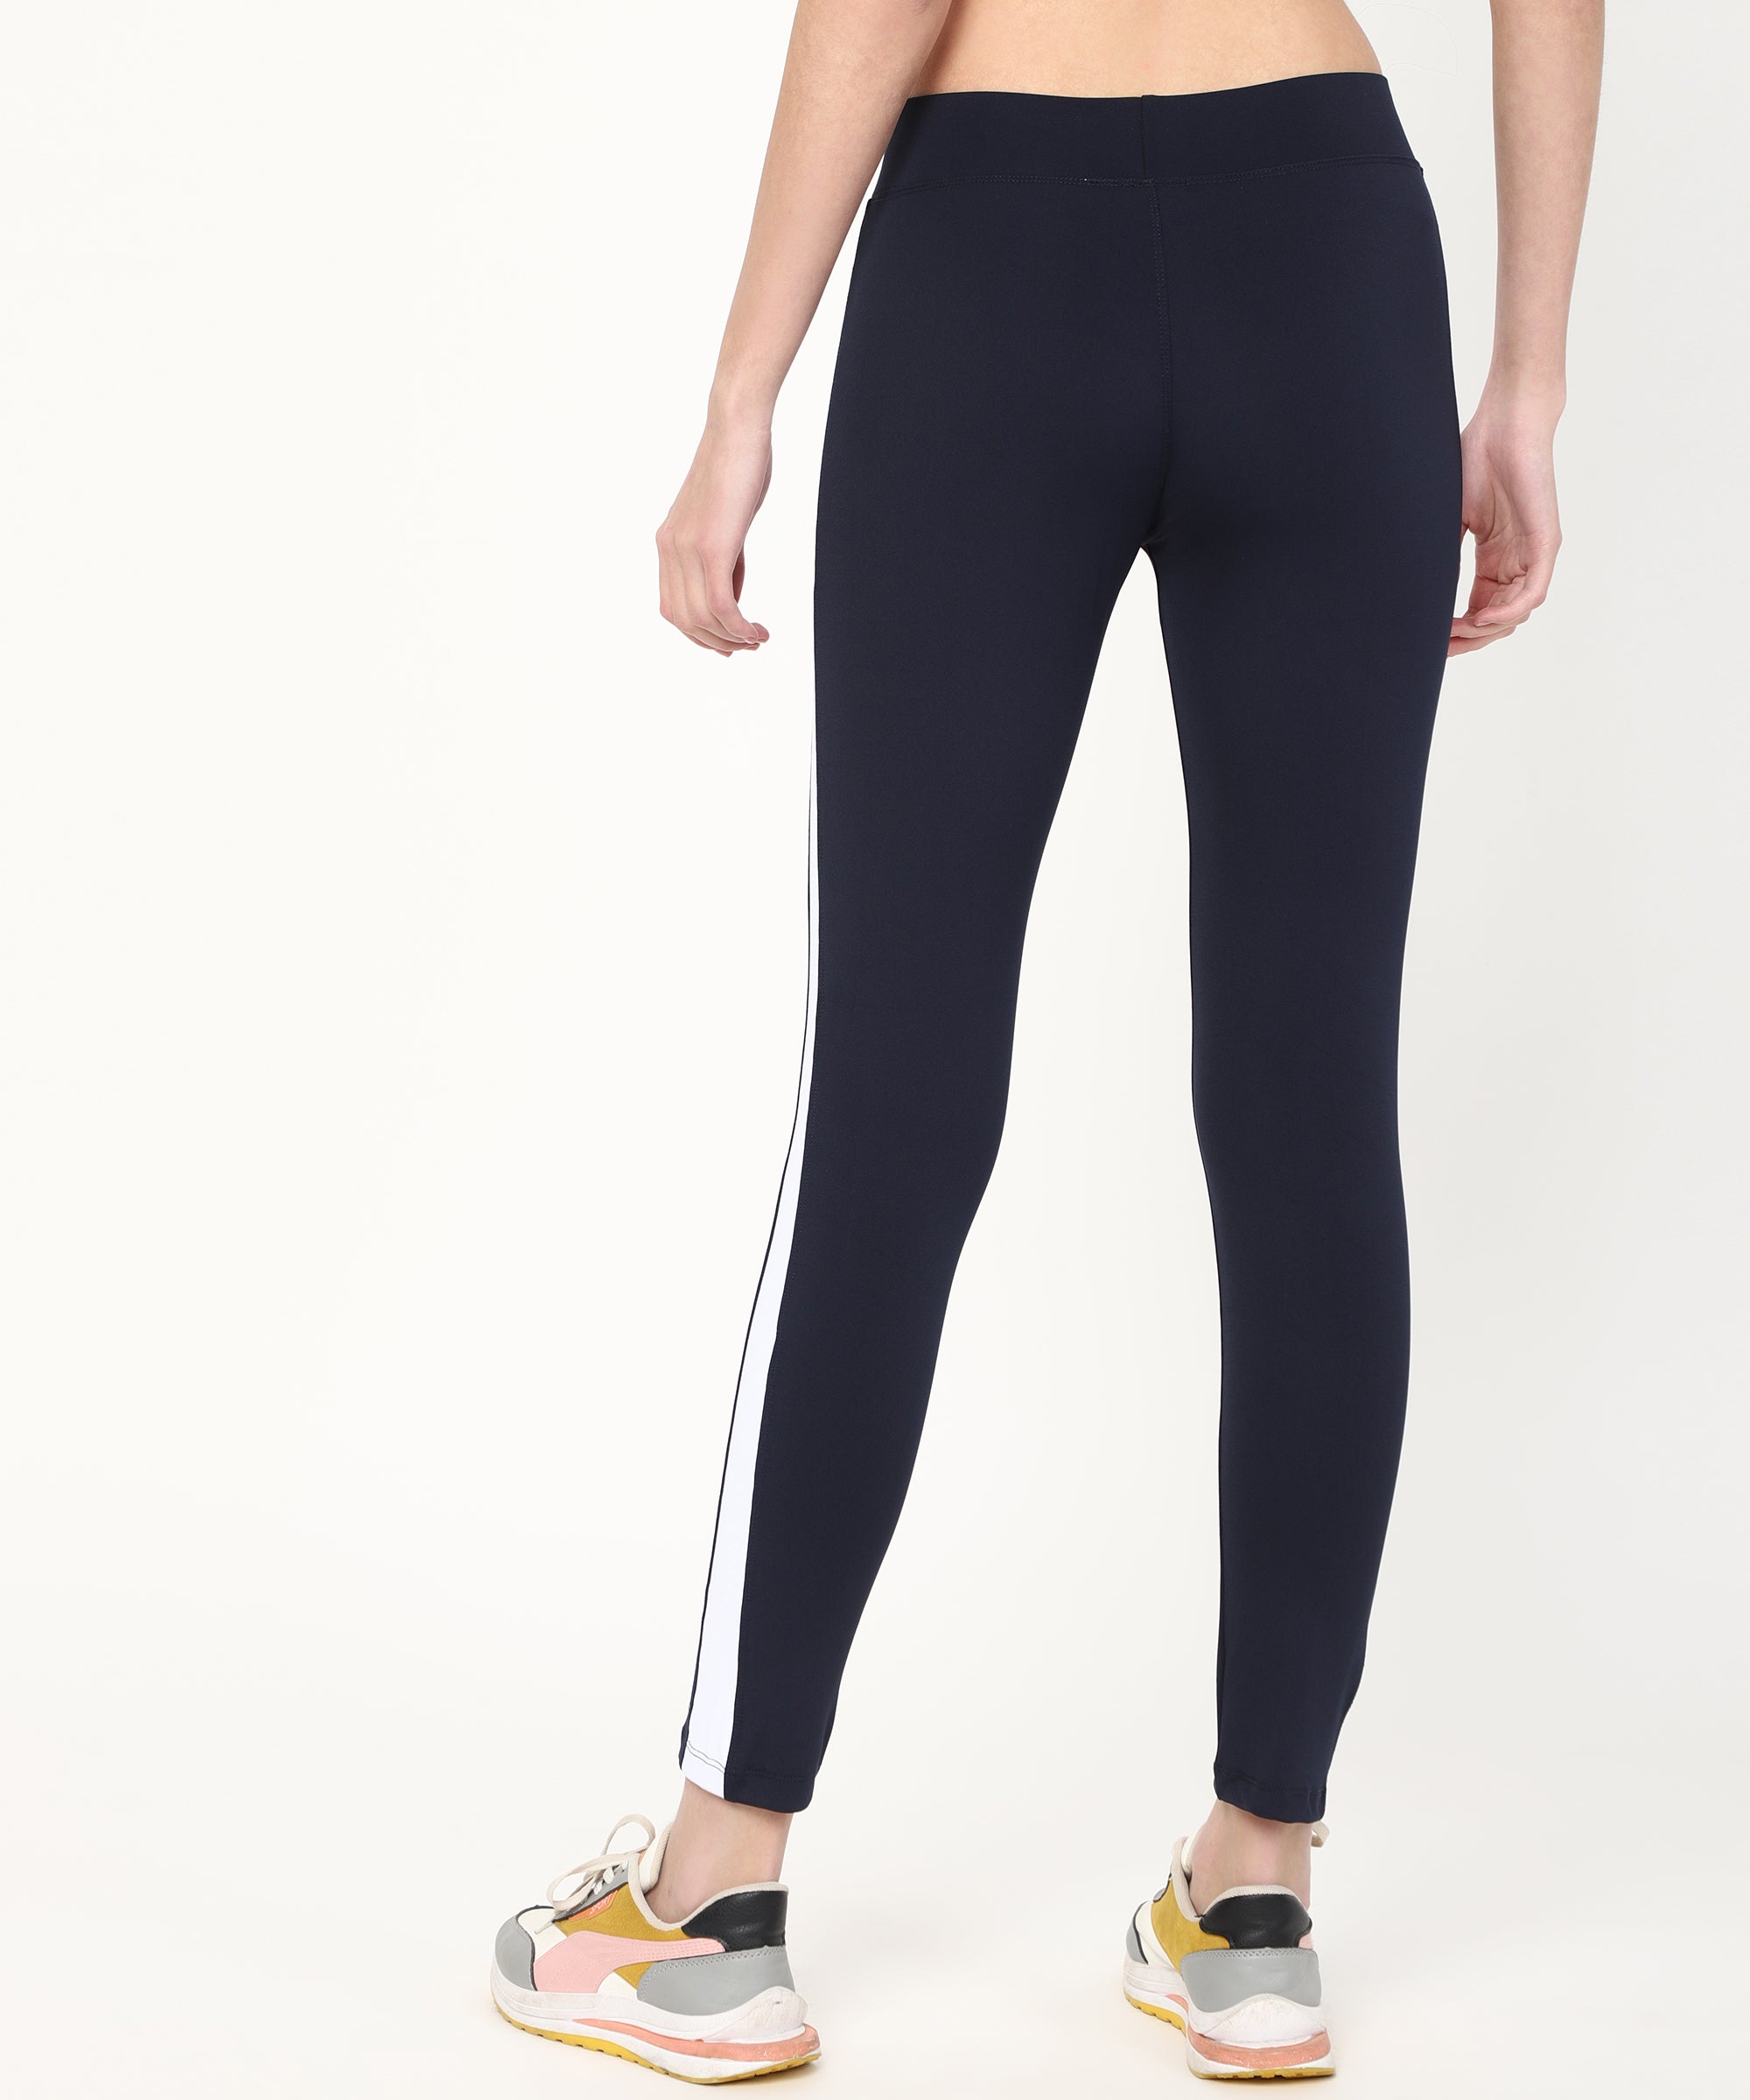 Dyegold Jeggings for Women High Waisted Stretchy Denim Print Leggings Plus  Size Jean Work Jeggings Tights Slimming Pant Capri - Walmart.com